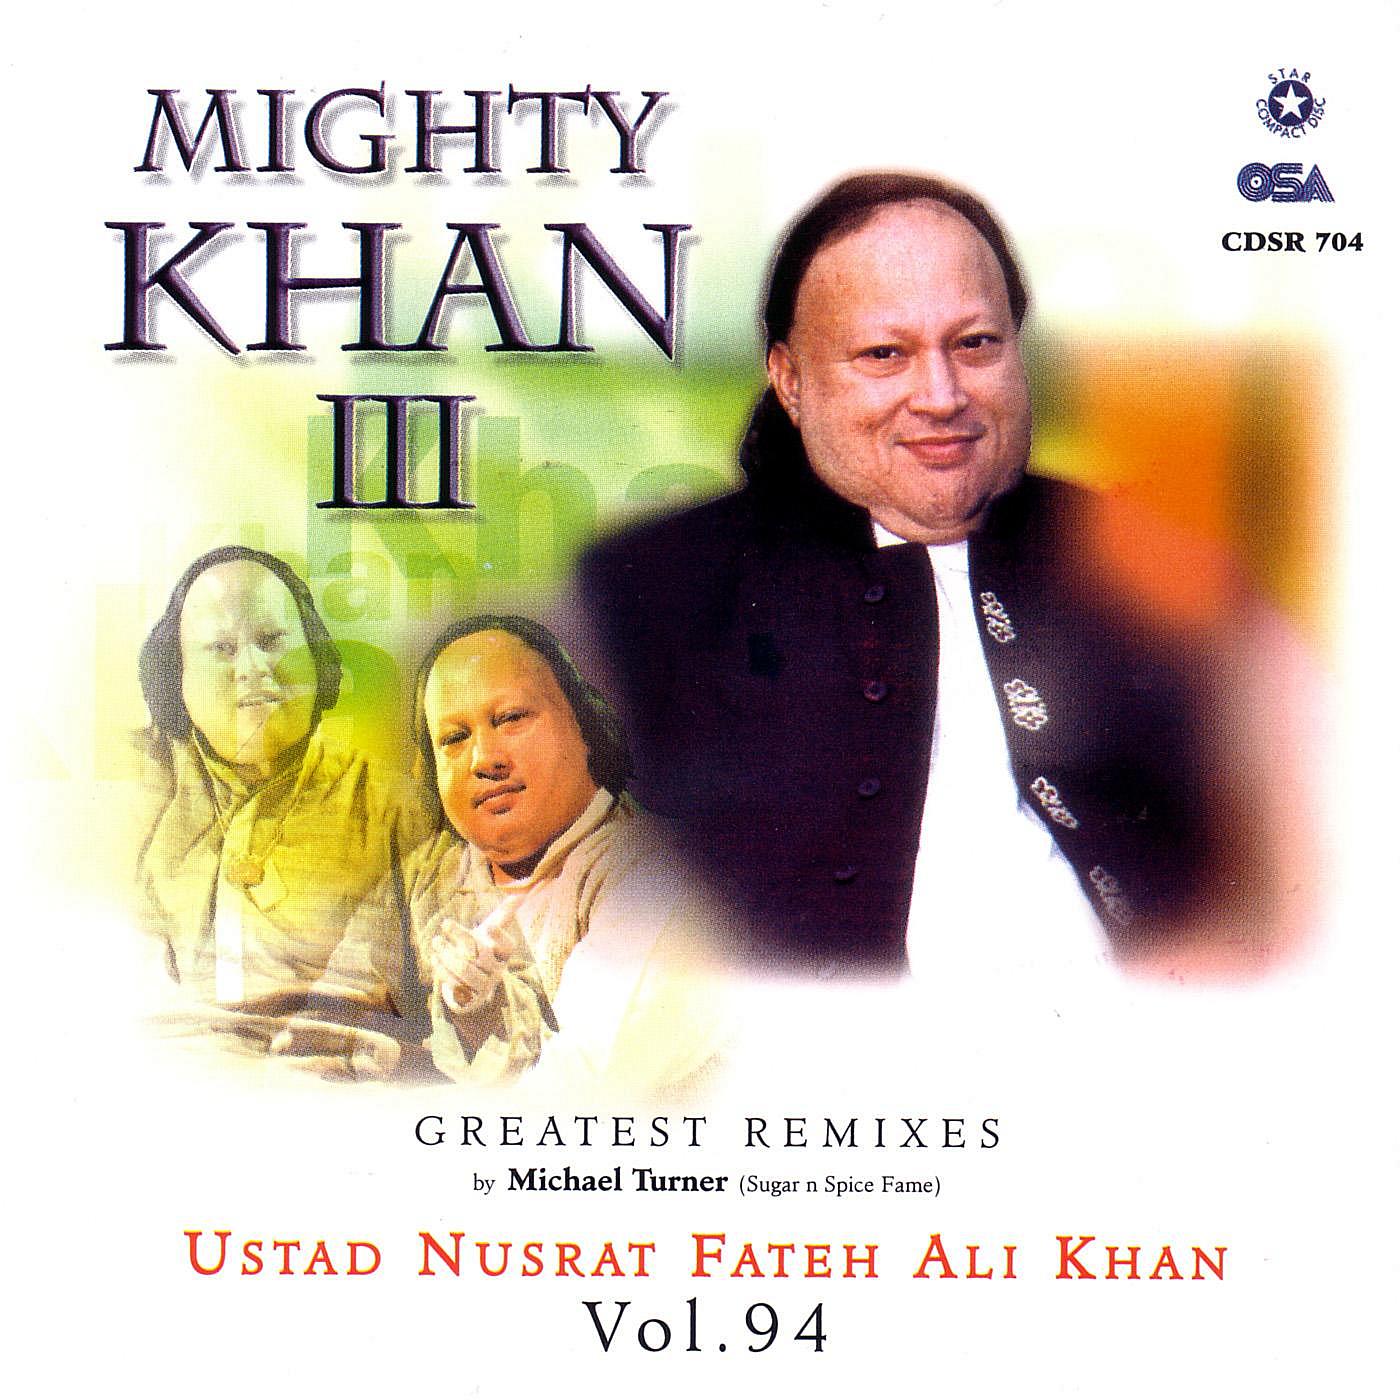 Nusrat Fateh Ali Khan: Album Cover Pics